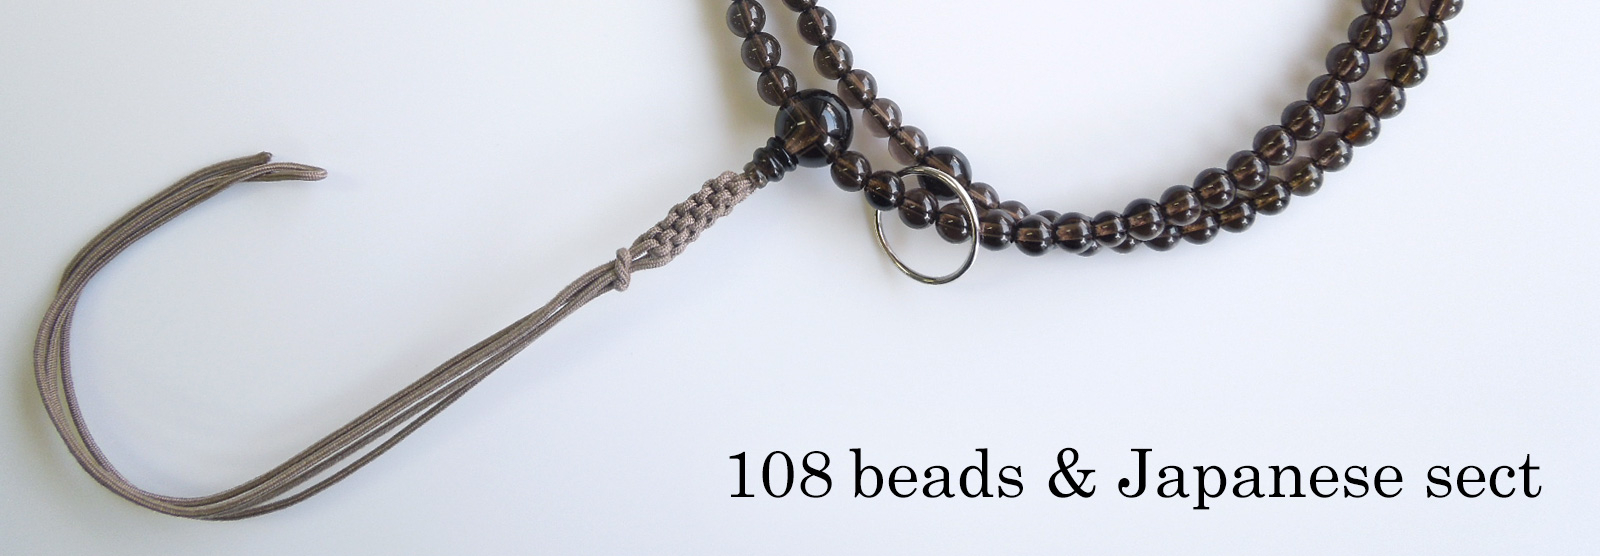 Long prayer beads